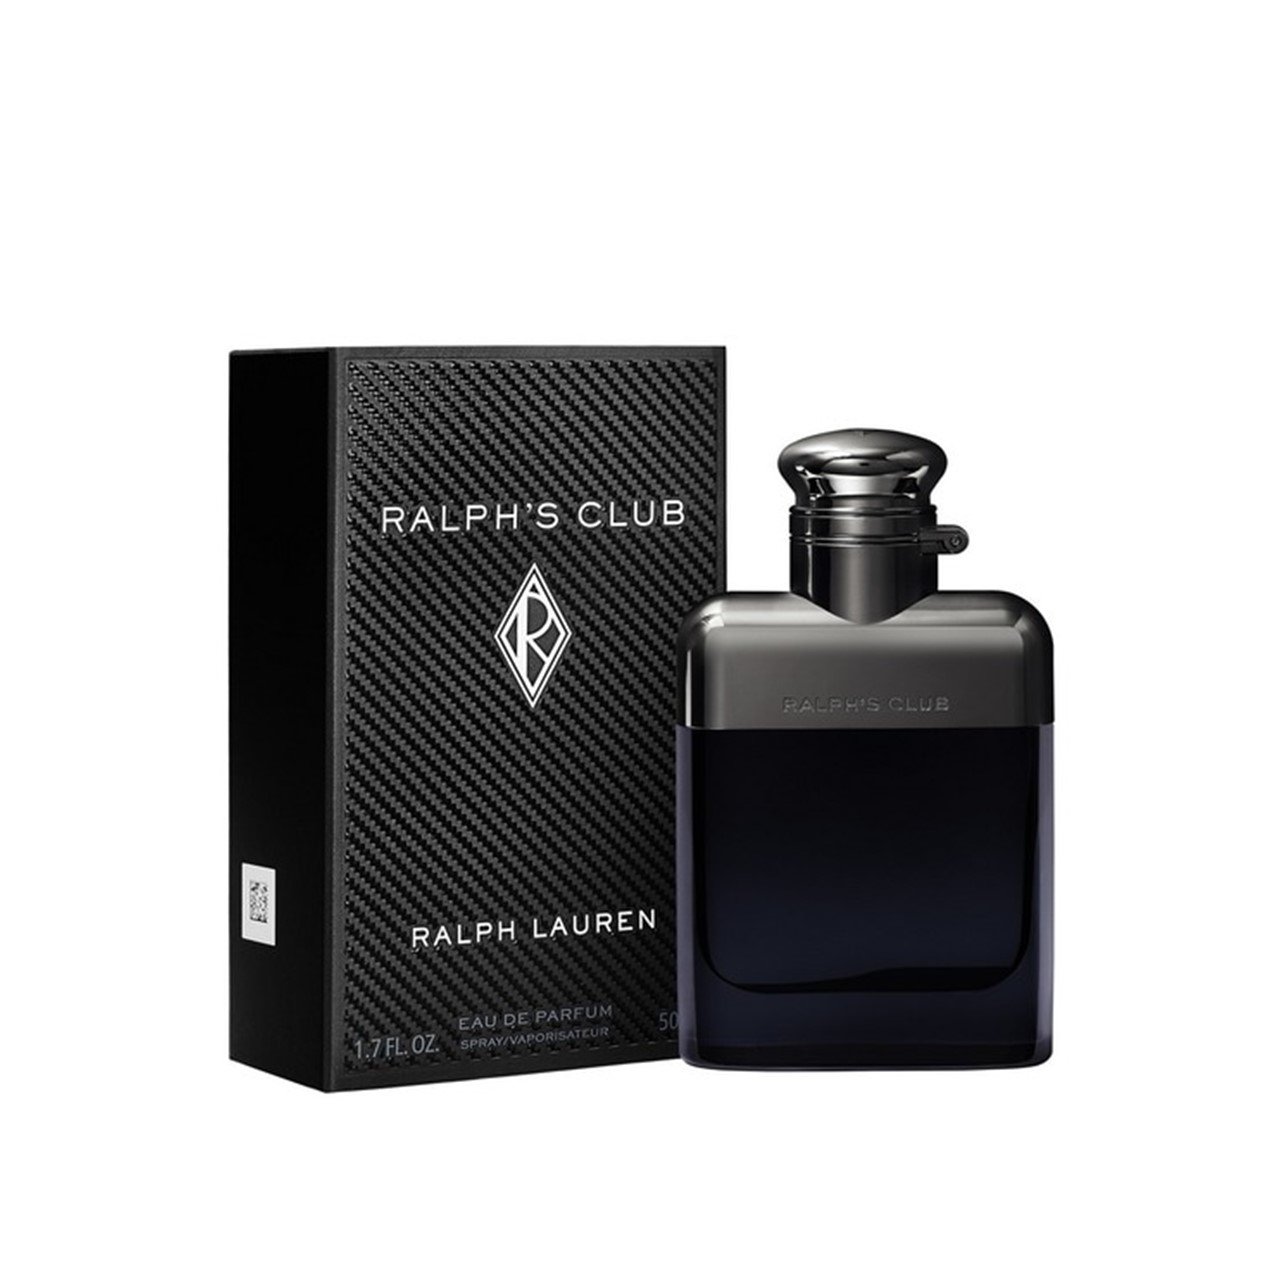 Buy Ralph Lauren Ralph's Club Eau de Parfum For Men 50ml · Pakistan